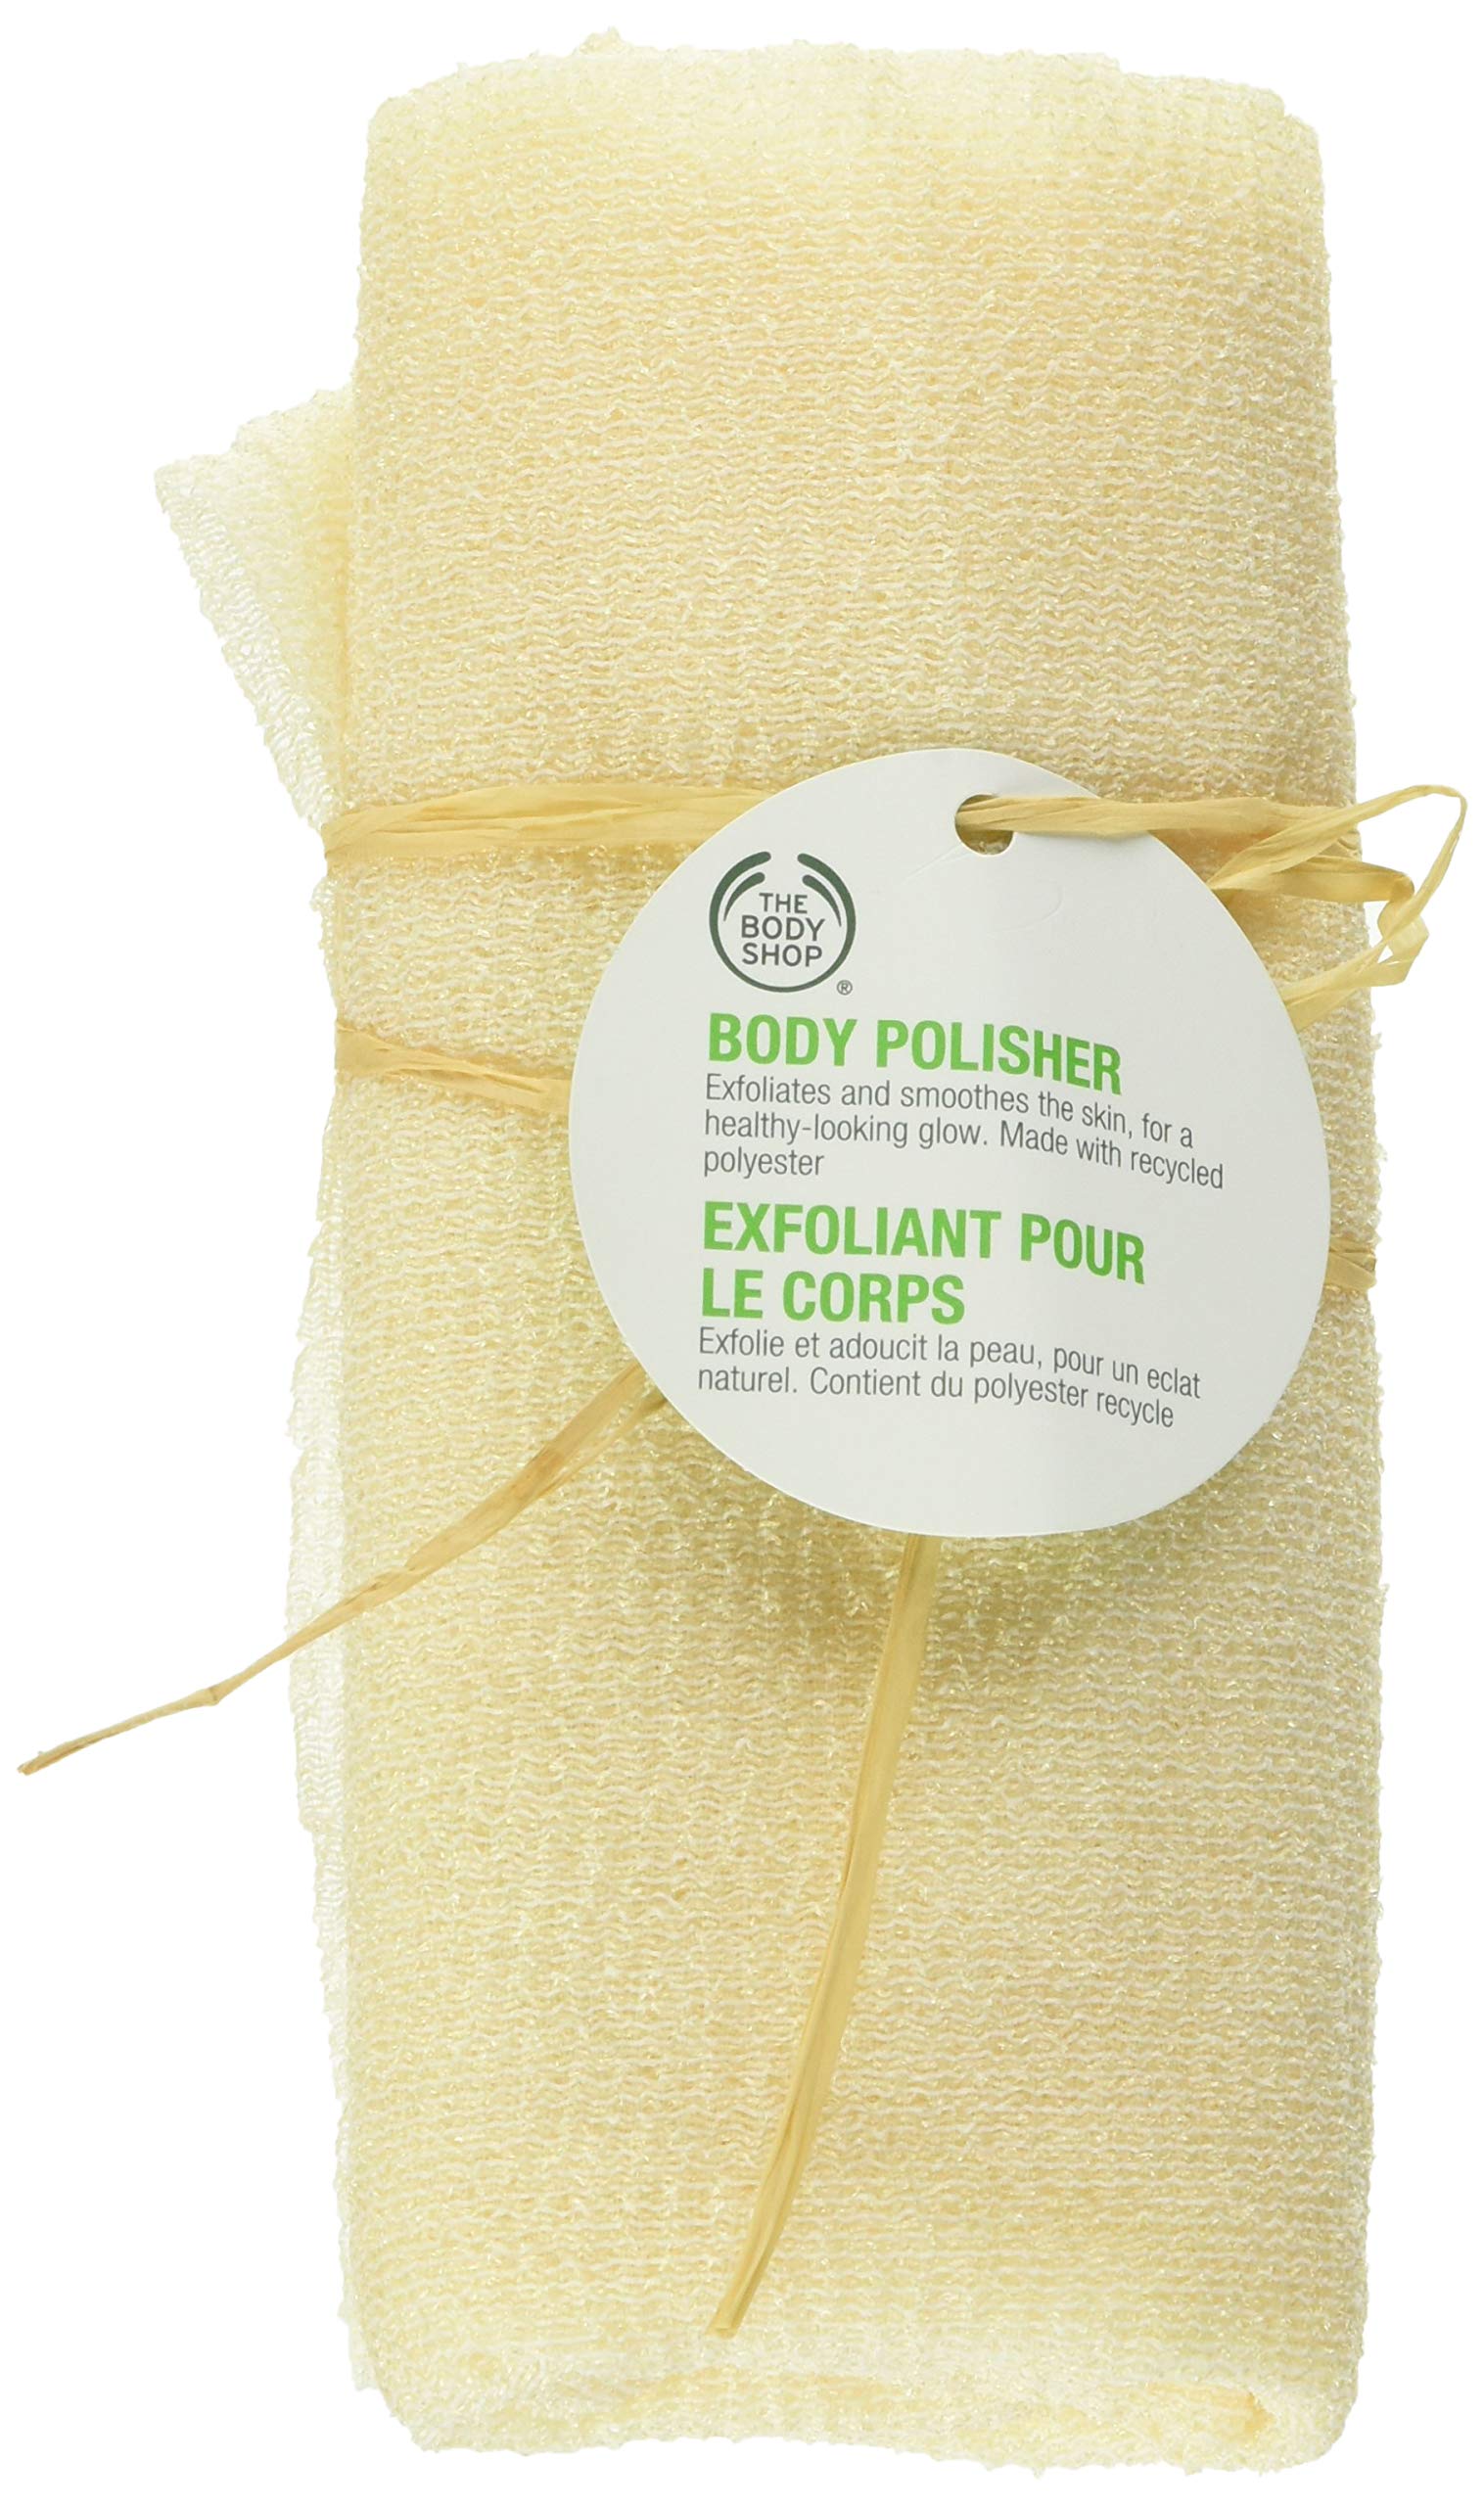 The Body Shop Exfoliating Skin Towel - Body Polisher - 1 Count